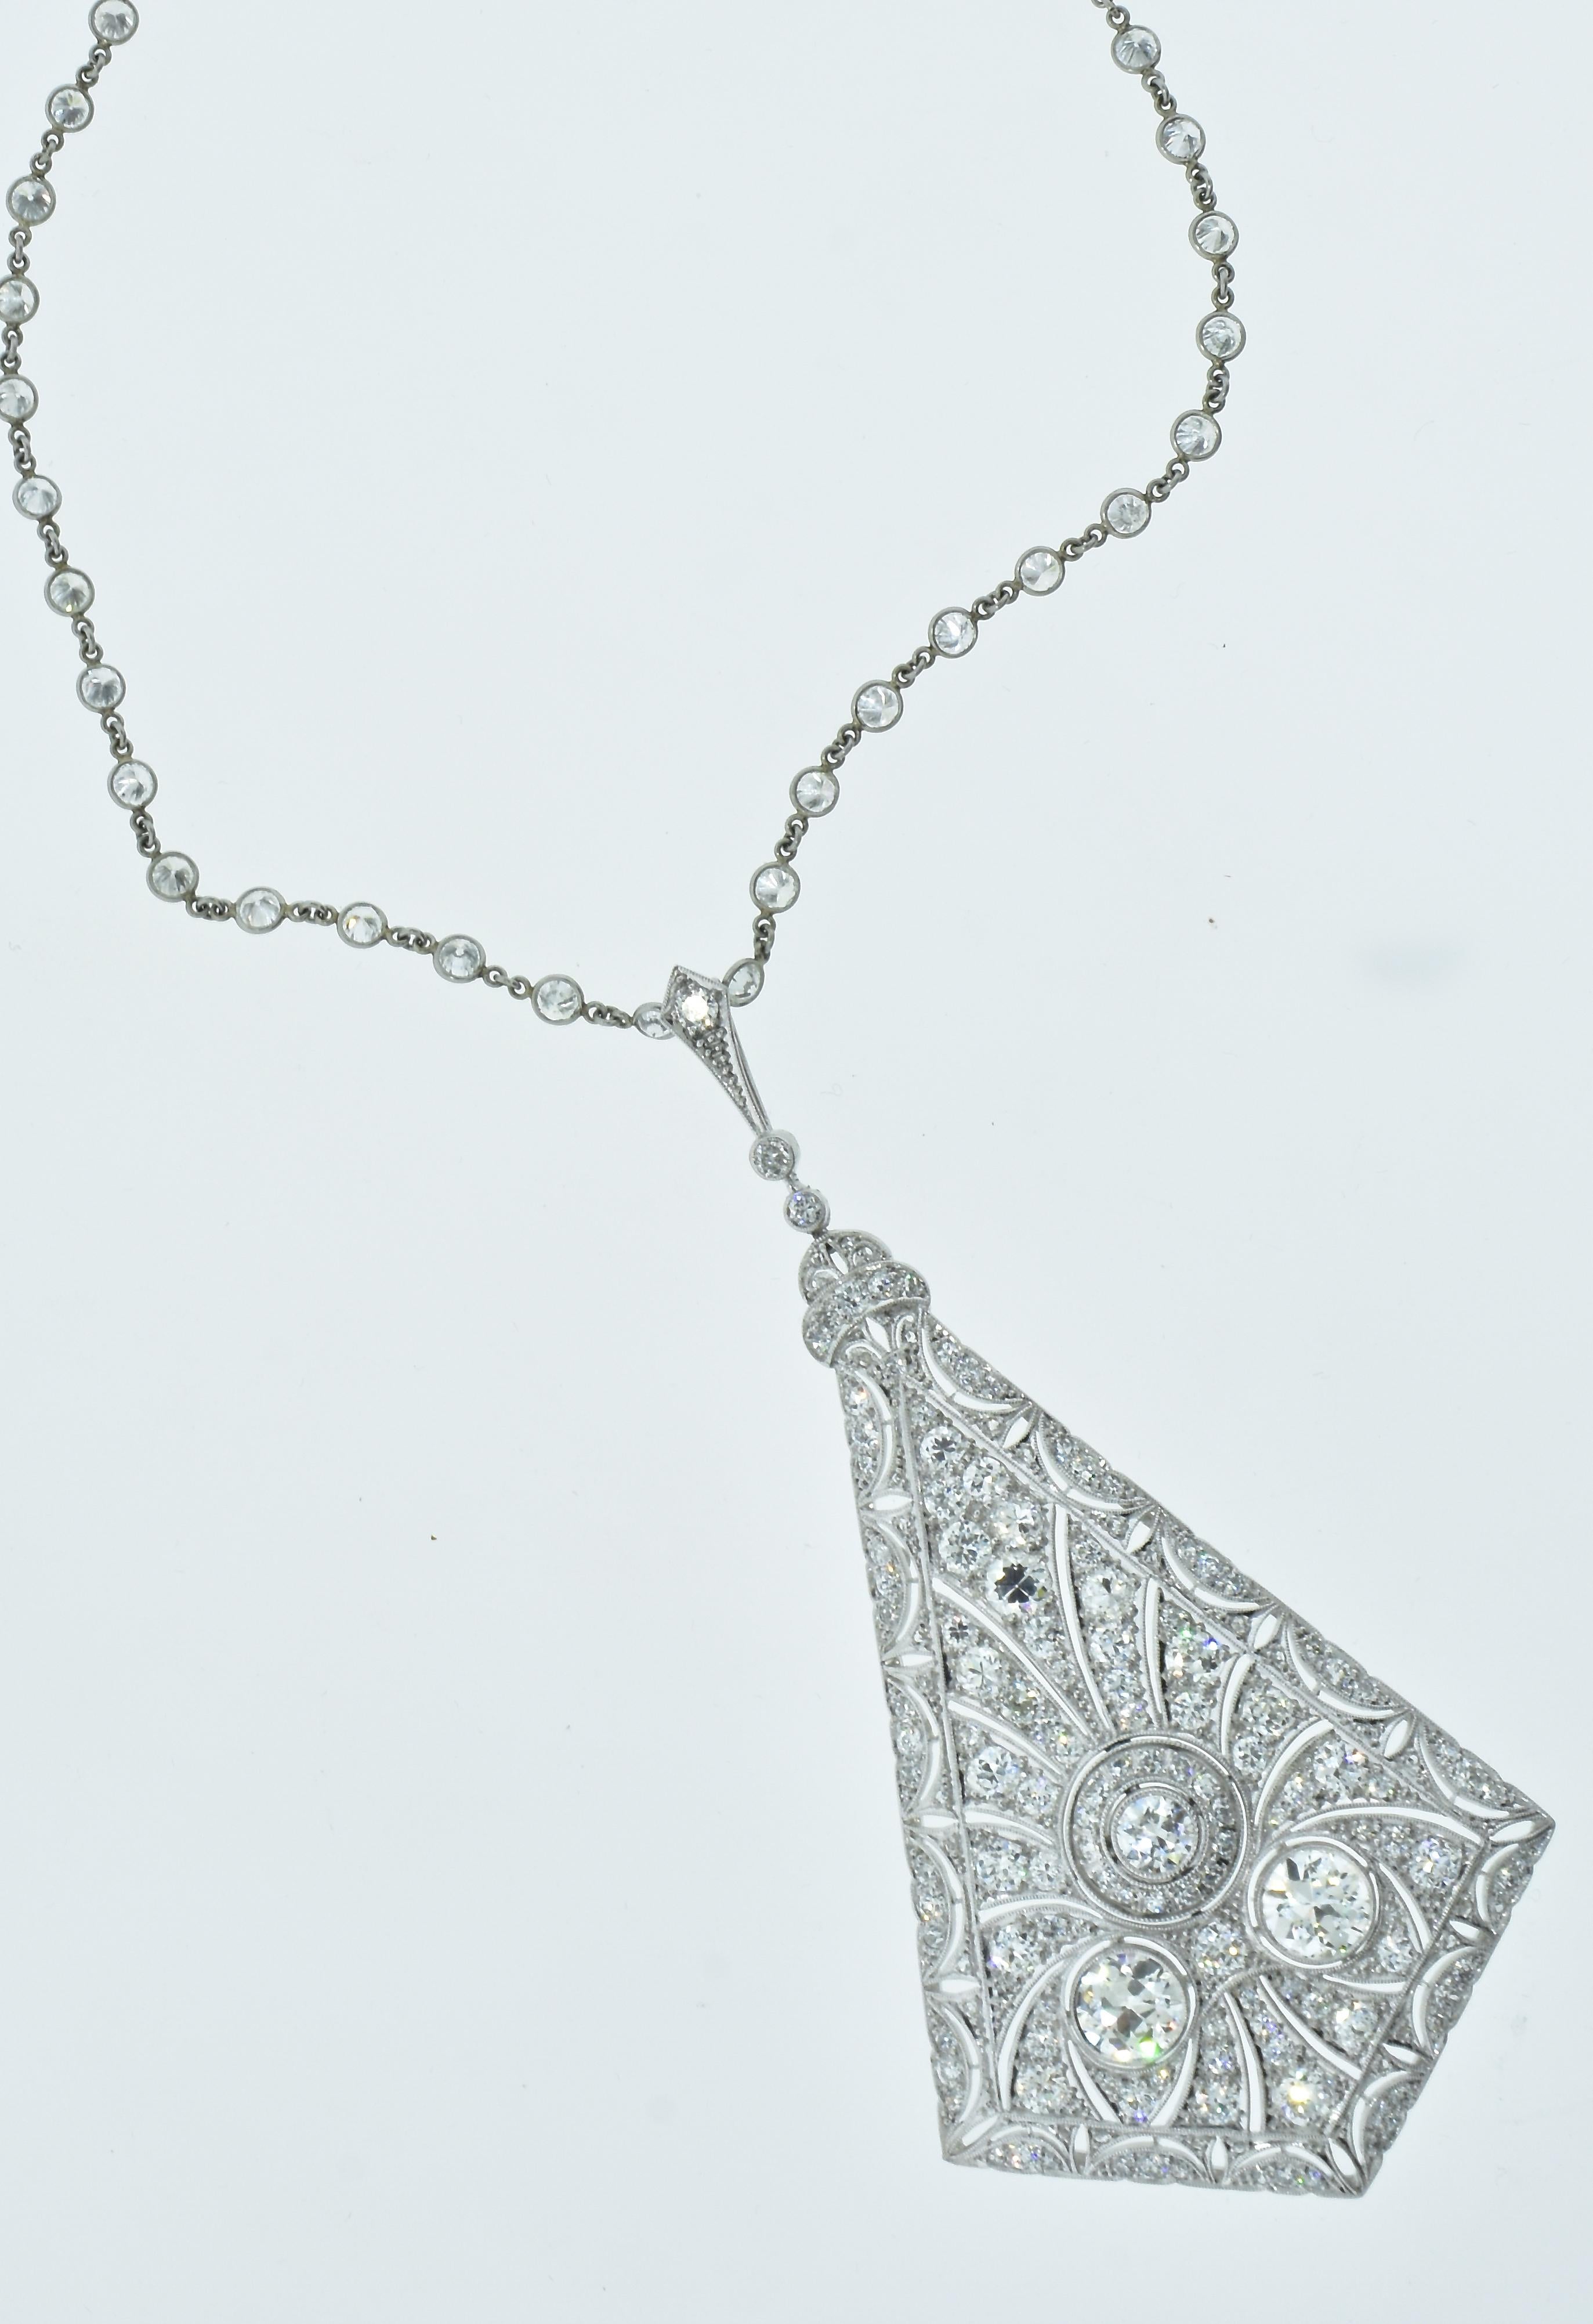 Edwardian Antique Platinum and Diamond Necklace, circa 1915